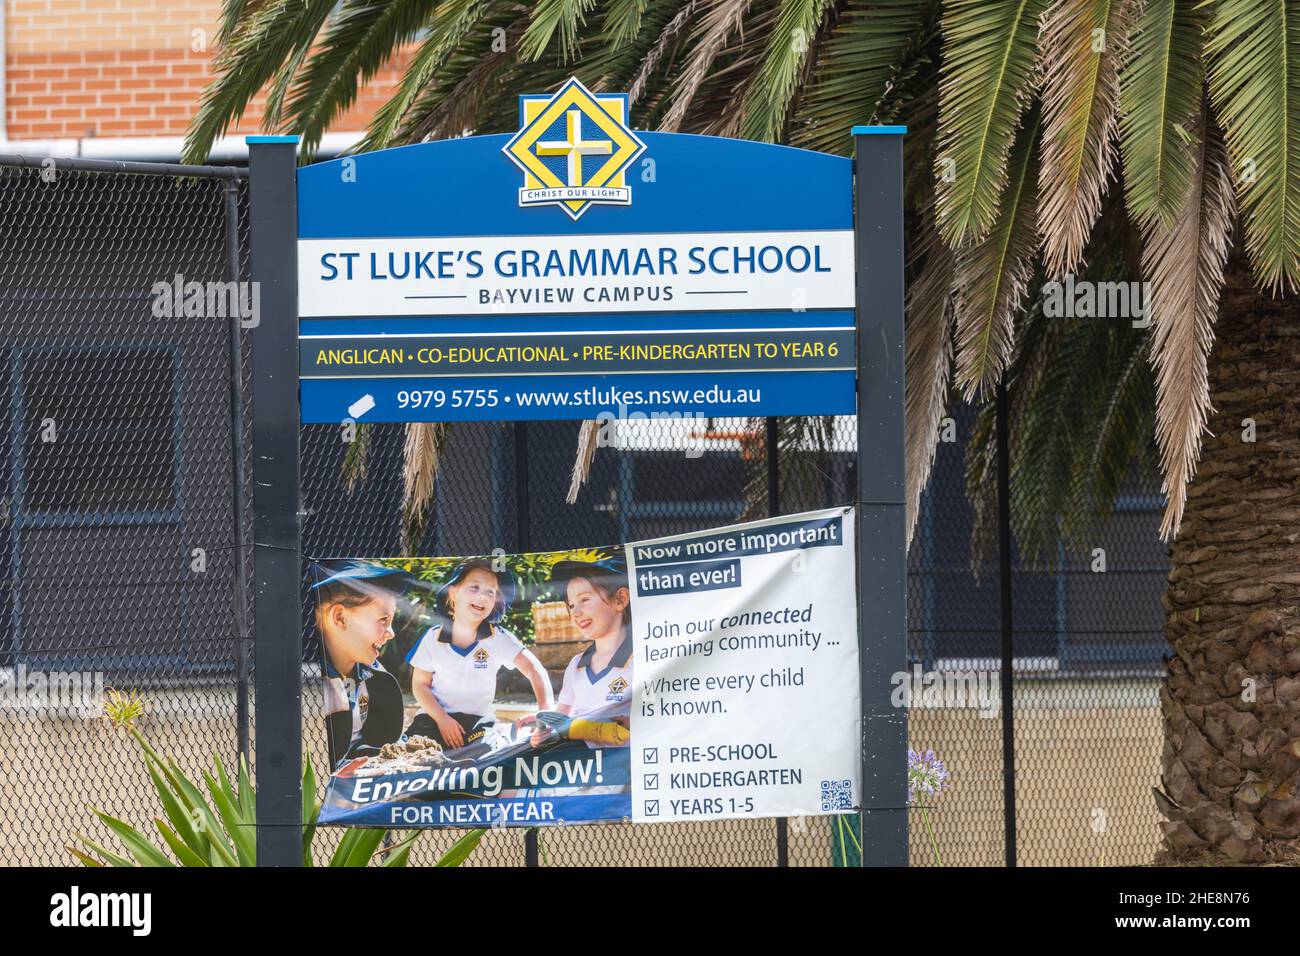 Australian anglican grammar school, St Lukes grammar school in Bayview for kindergarten to year 6 students,Sydney,Australia Stock Photo